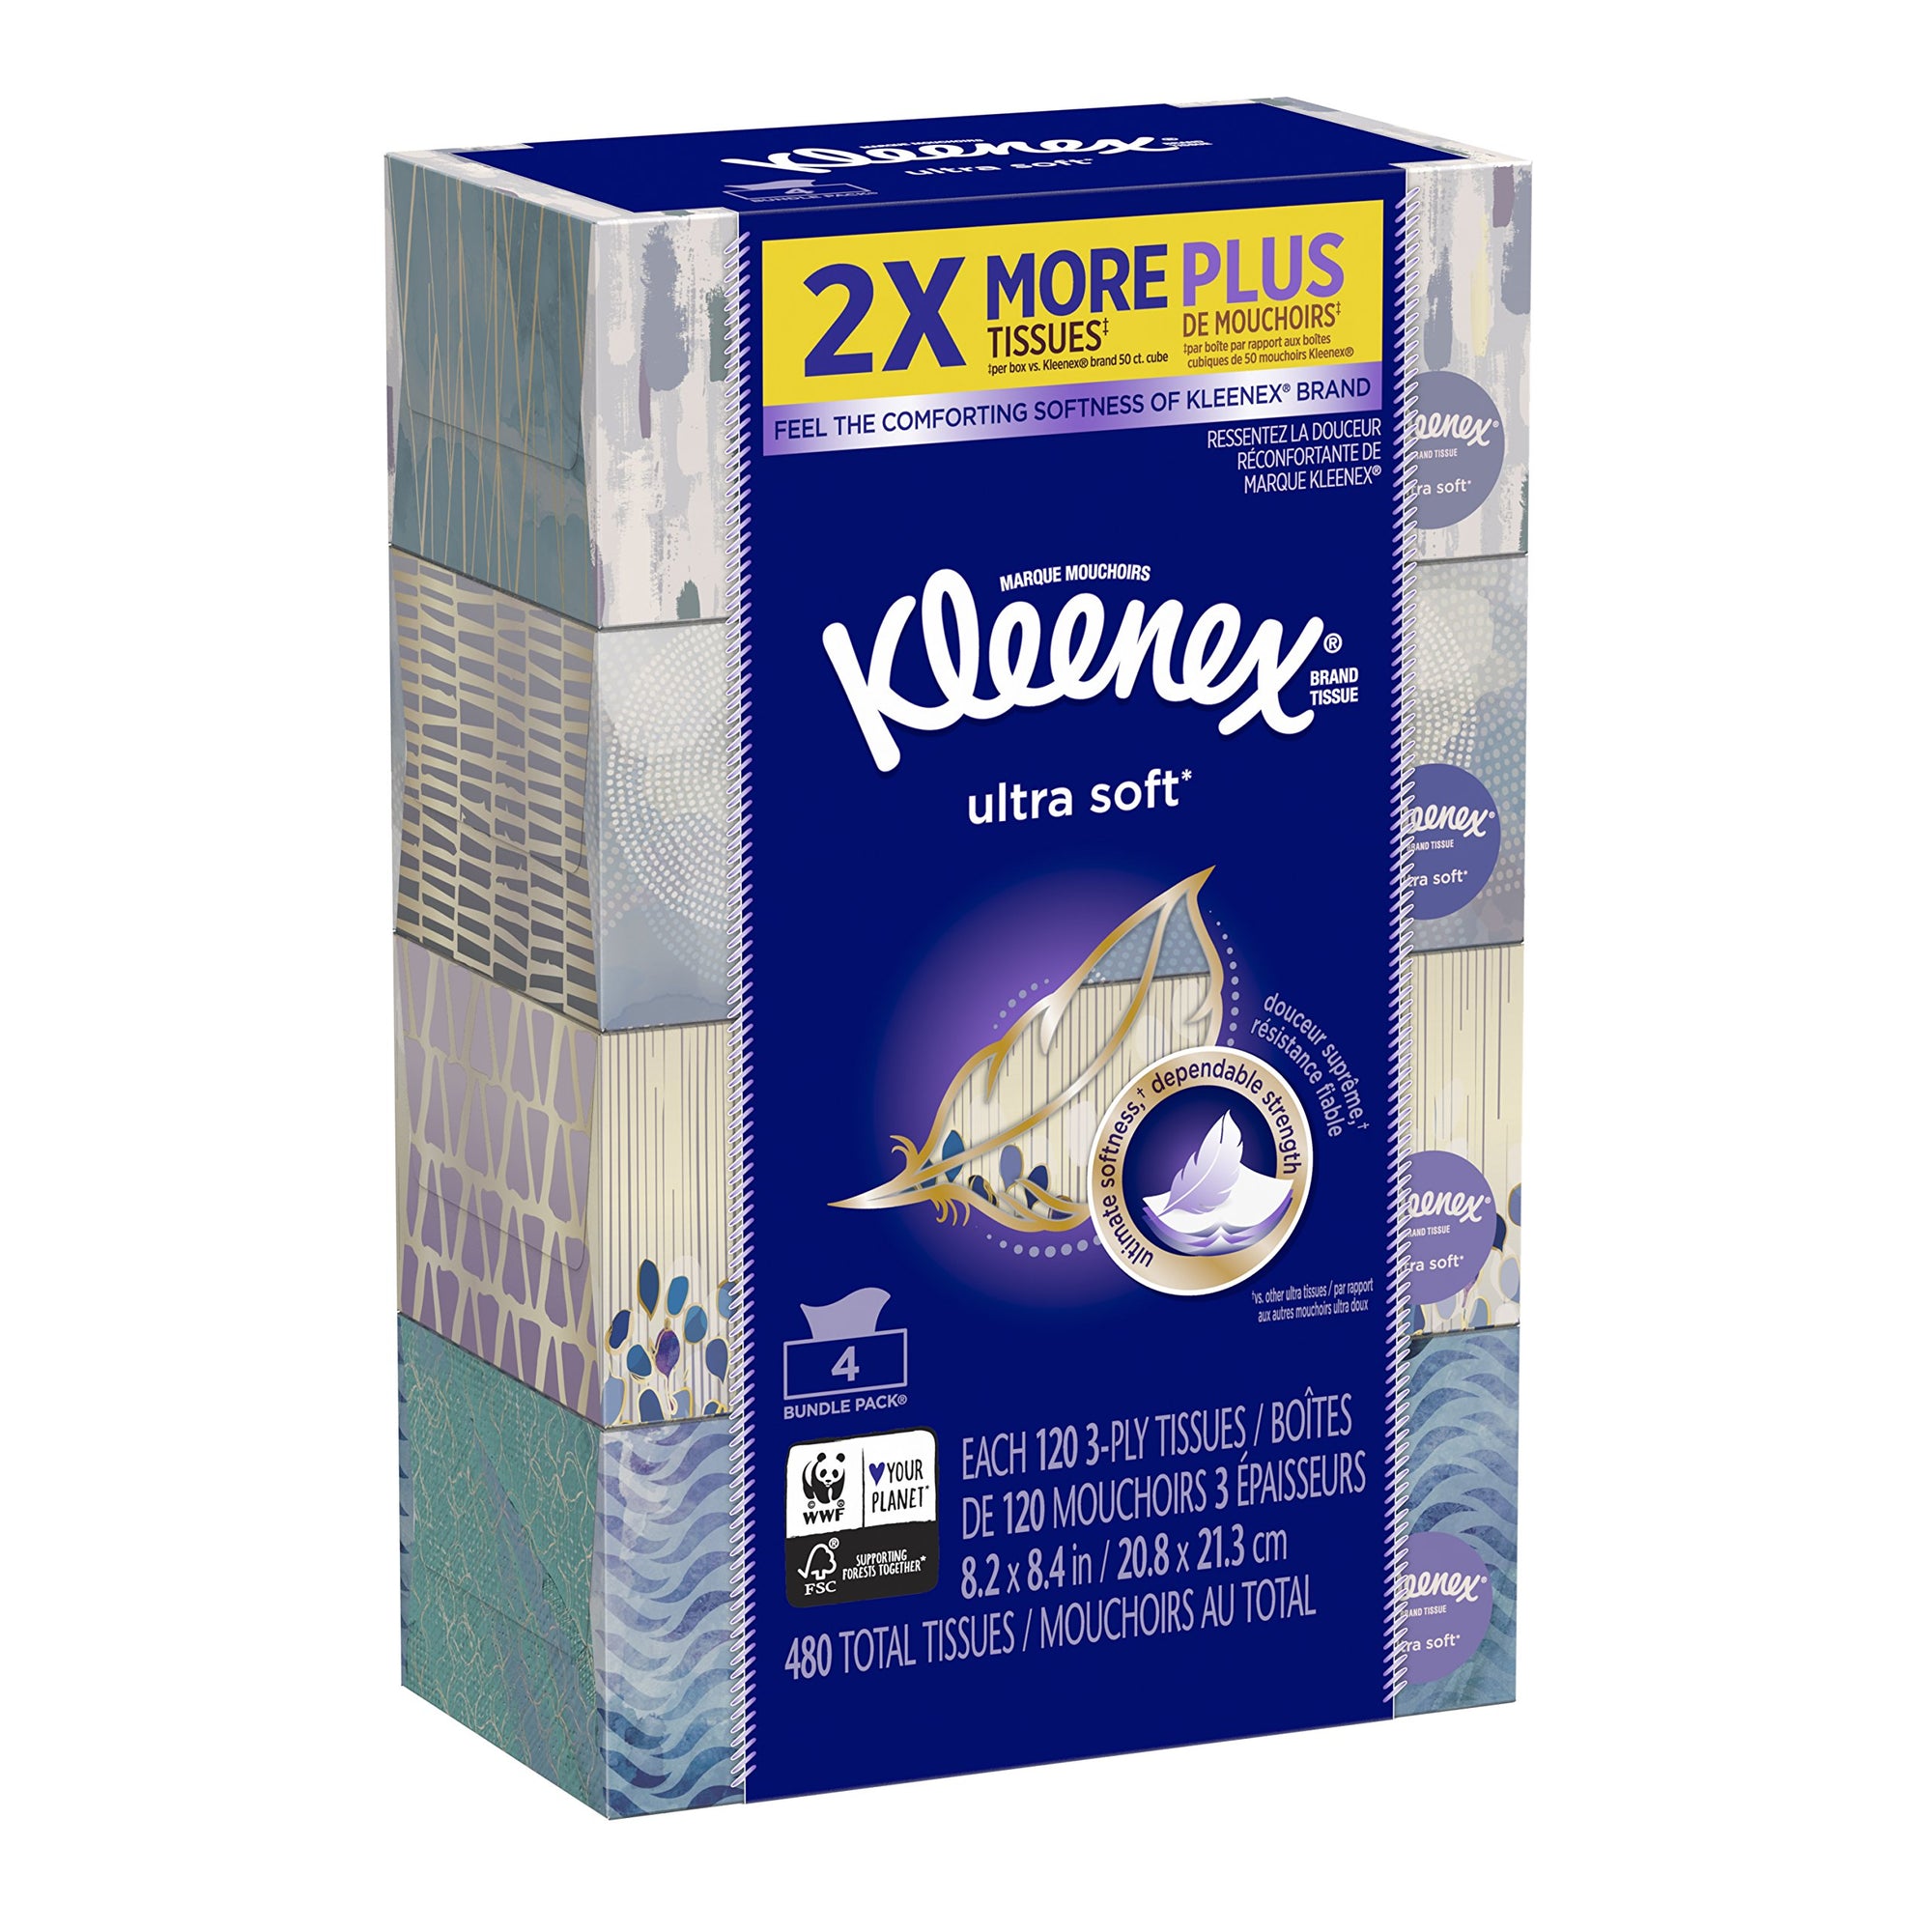 Kleenex Ultra Soft Facial Tissues, 4 Flat Boxes, 120 White Tissues